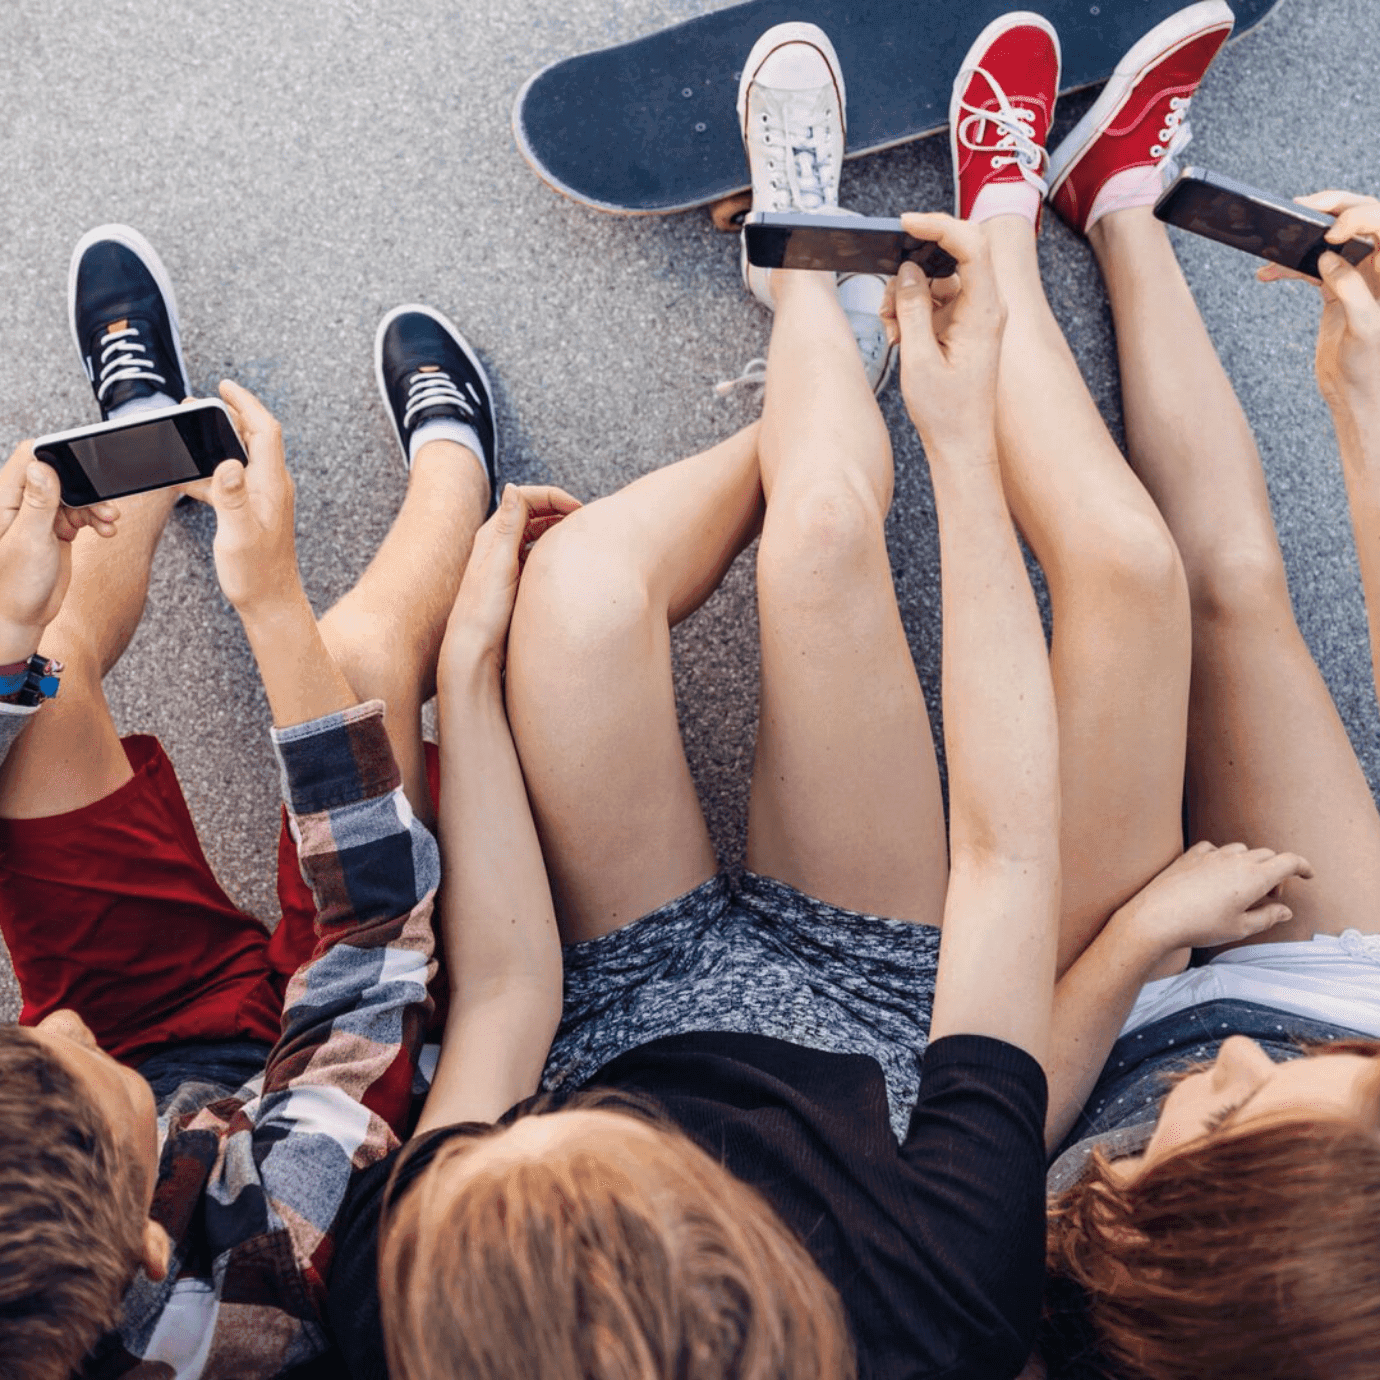 vodafone-young-kids-using-mobile-phones-skateboarding